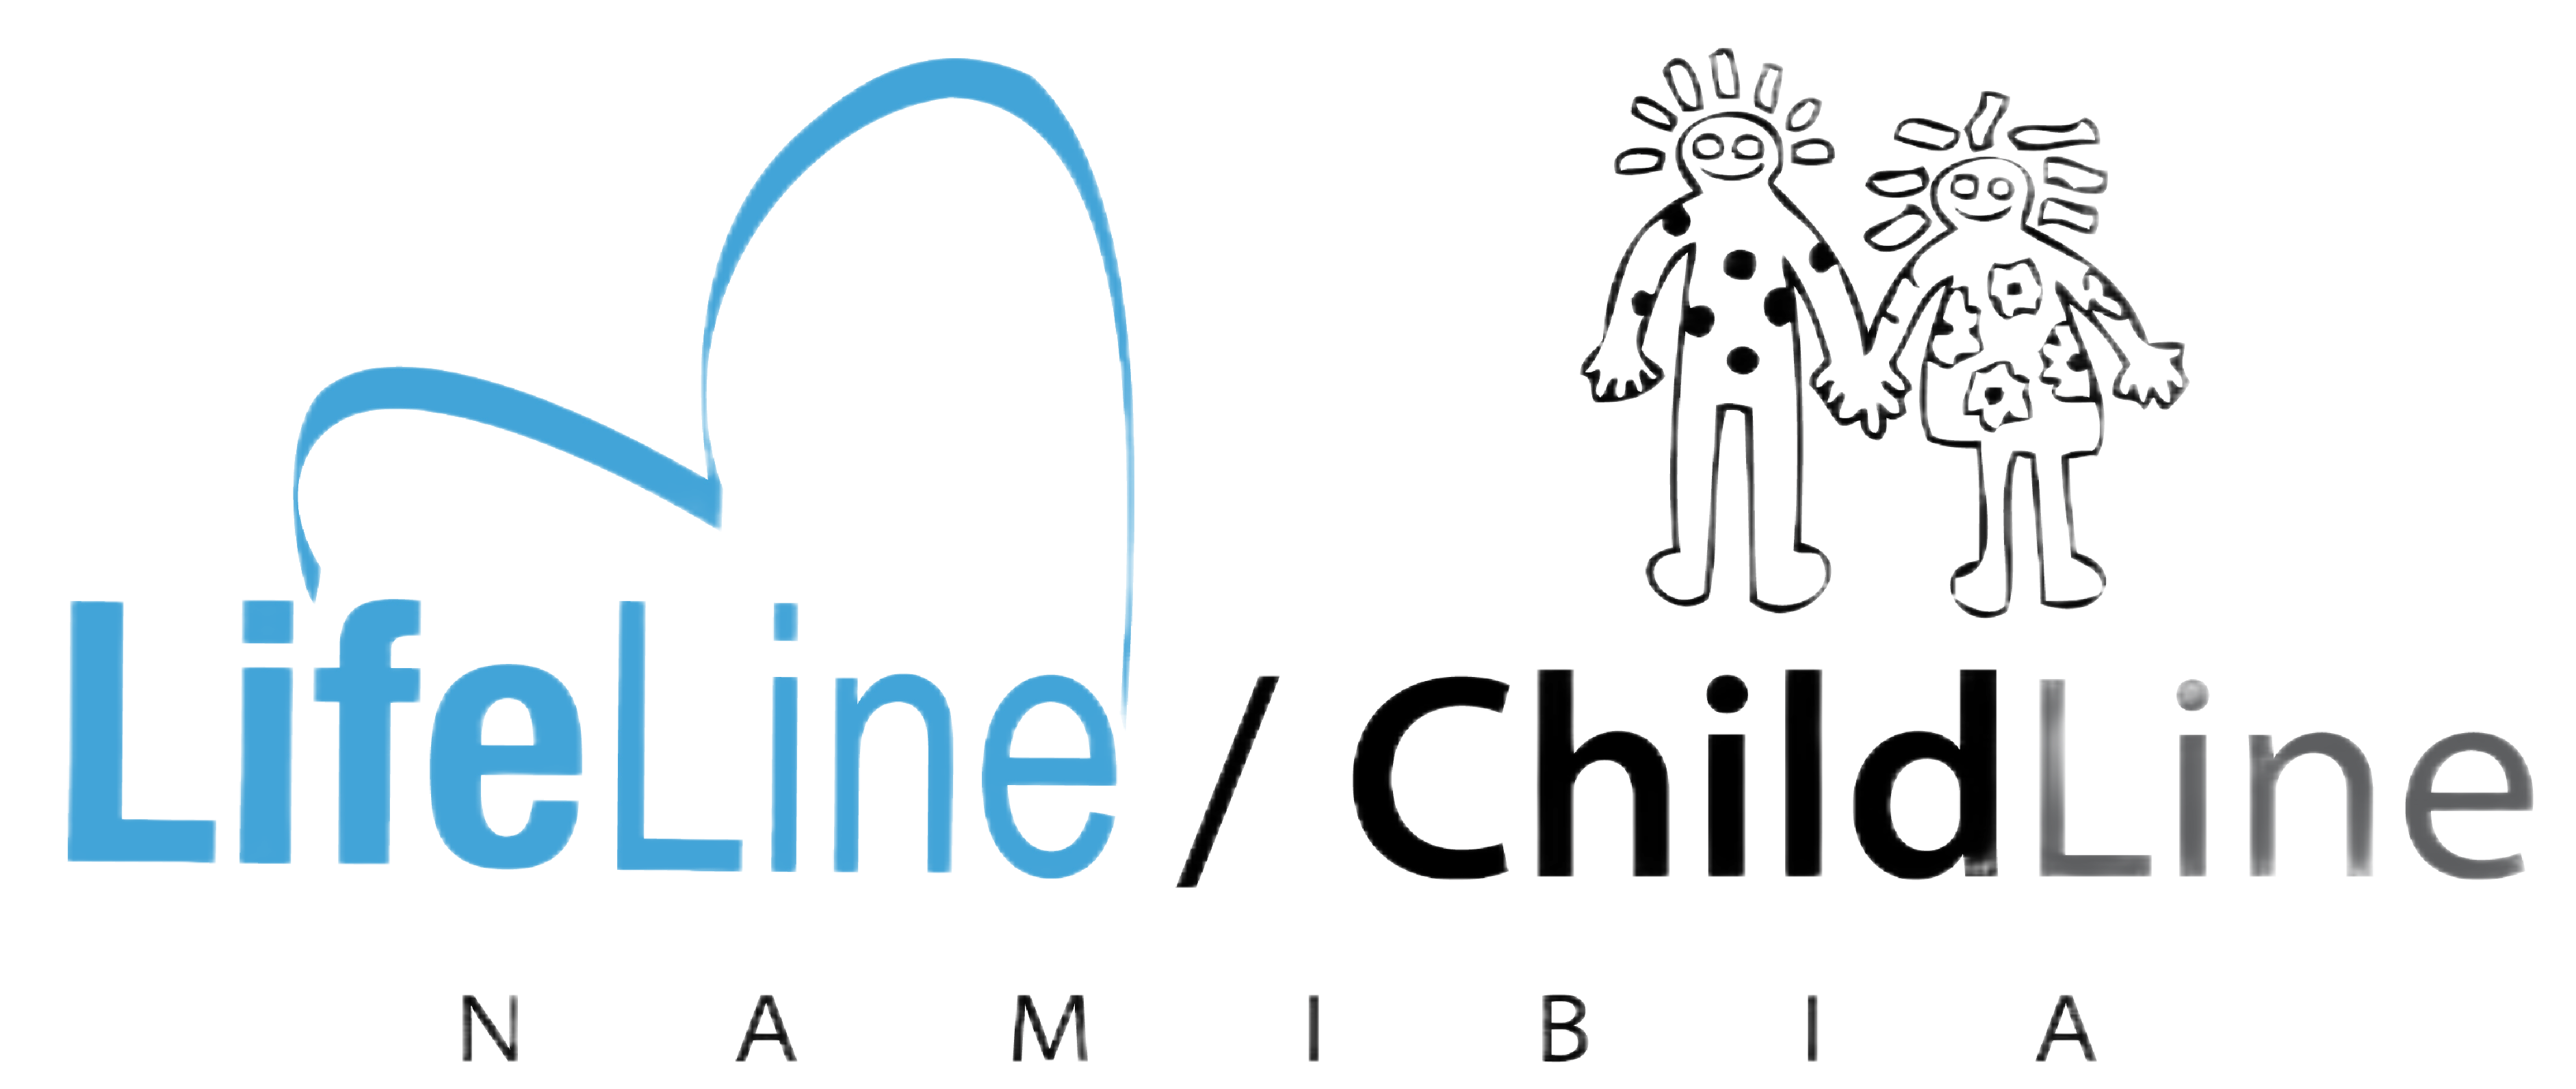 Lifeline Childline Namibia